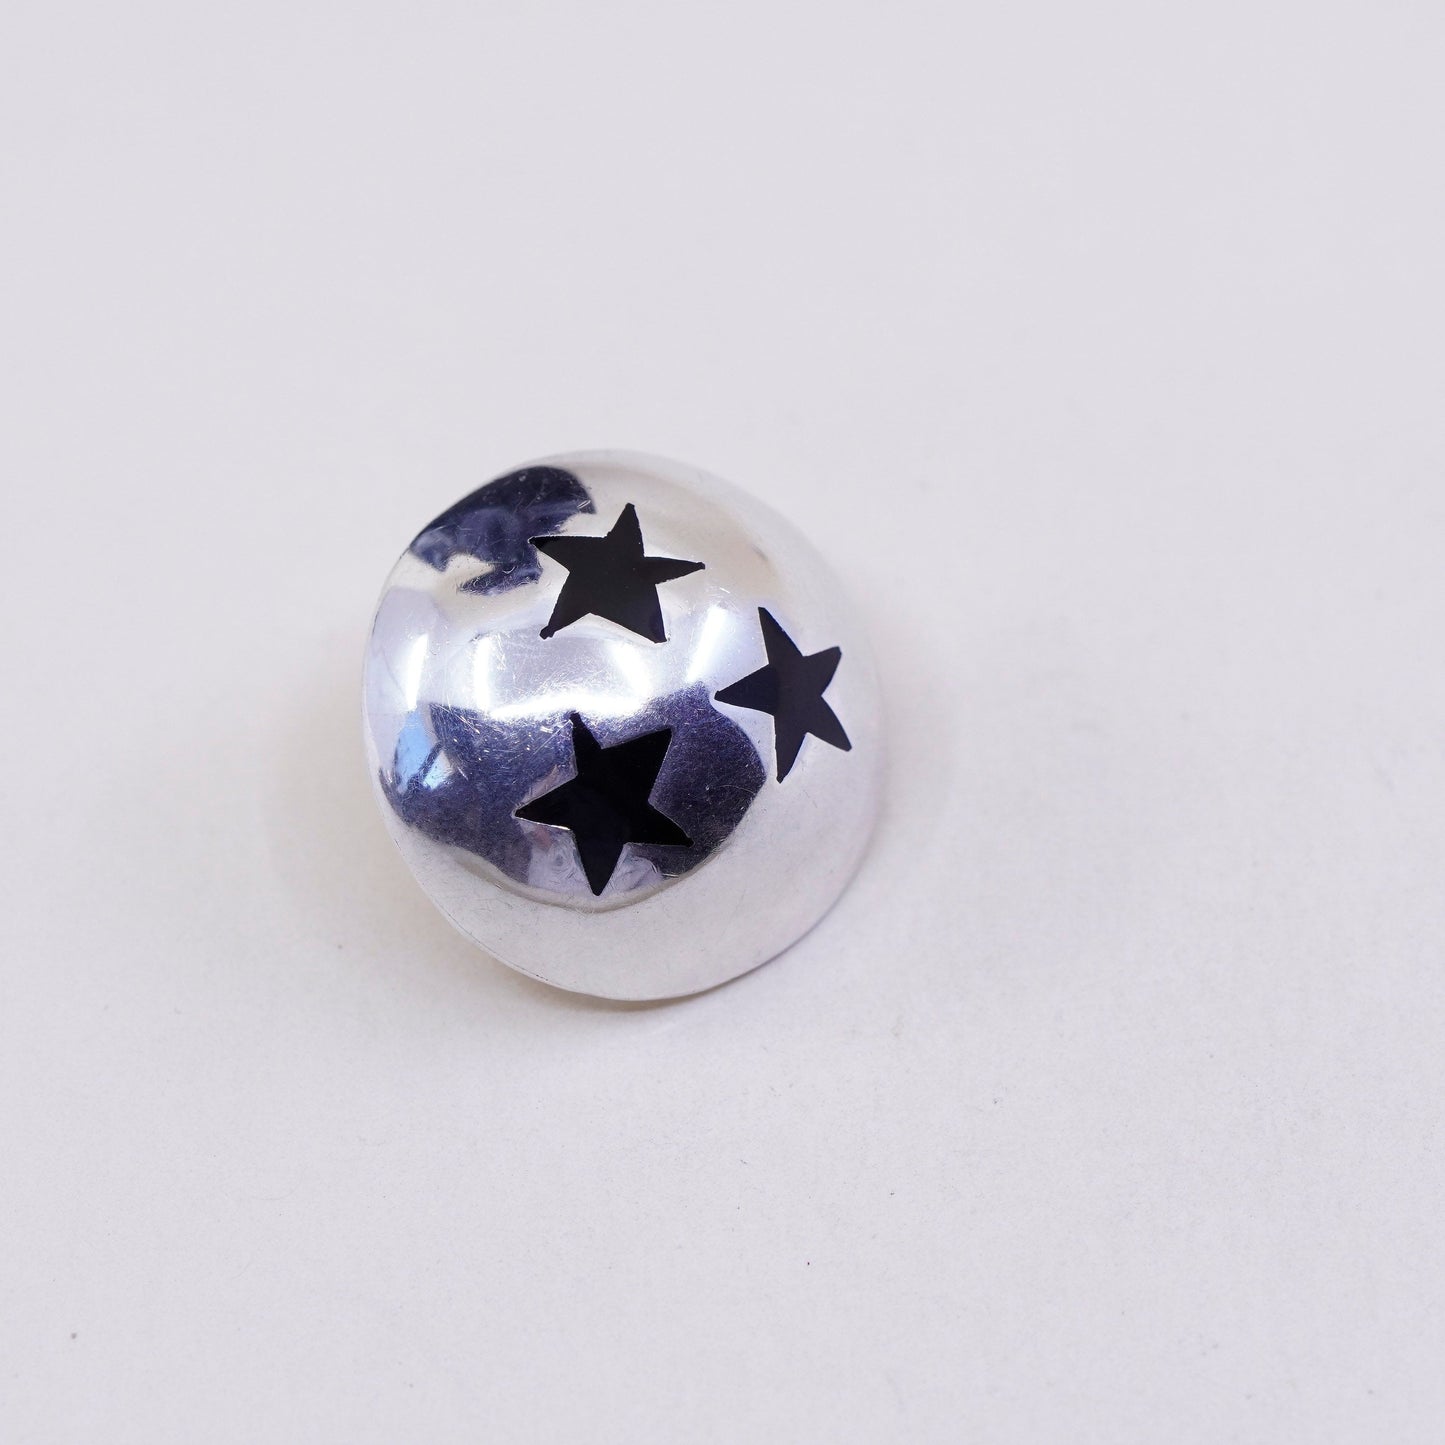 Sterling silver handmade earrings, Mexico 925 studs with black enamel stars